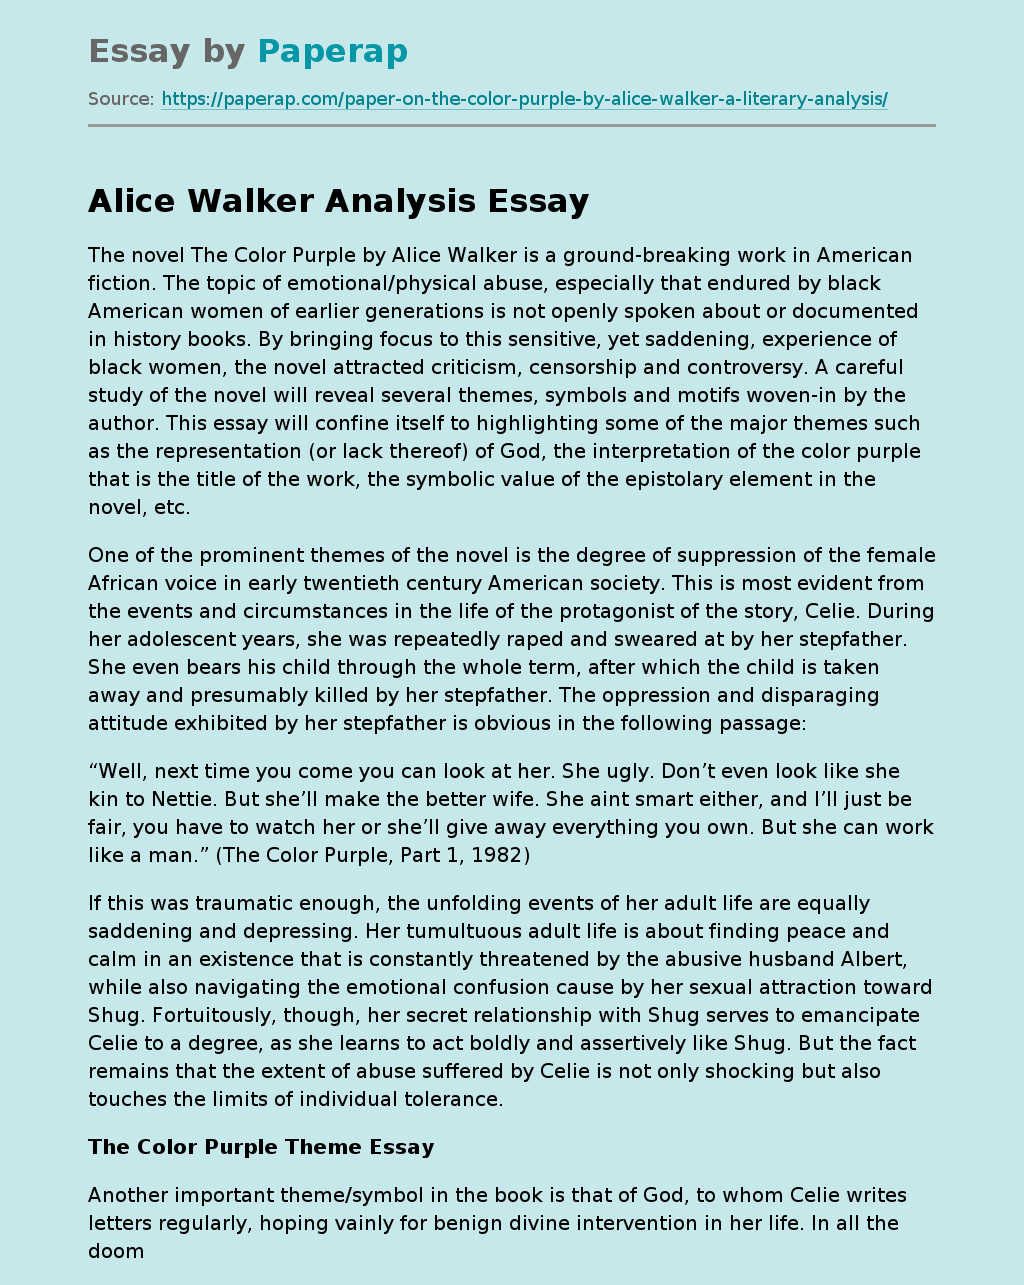 Alice Walker’s Novel the Color Purple